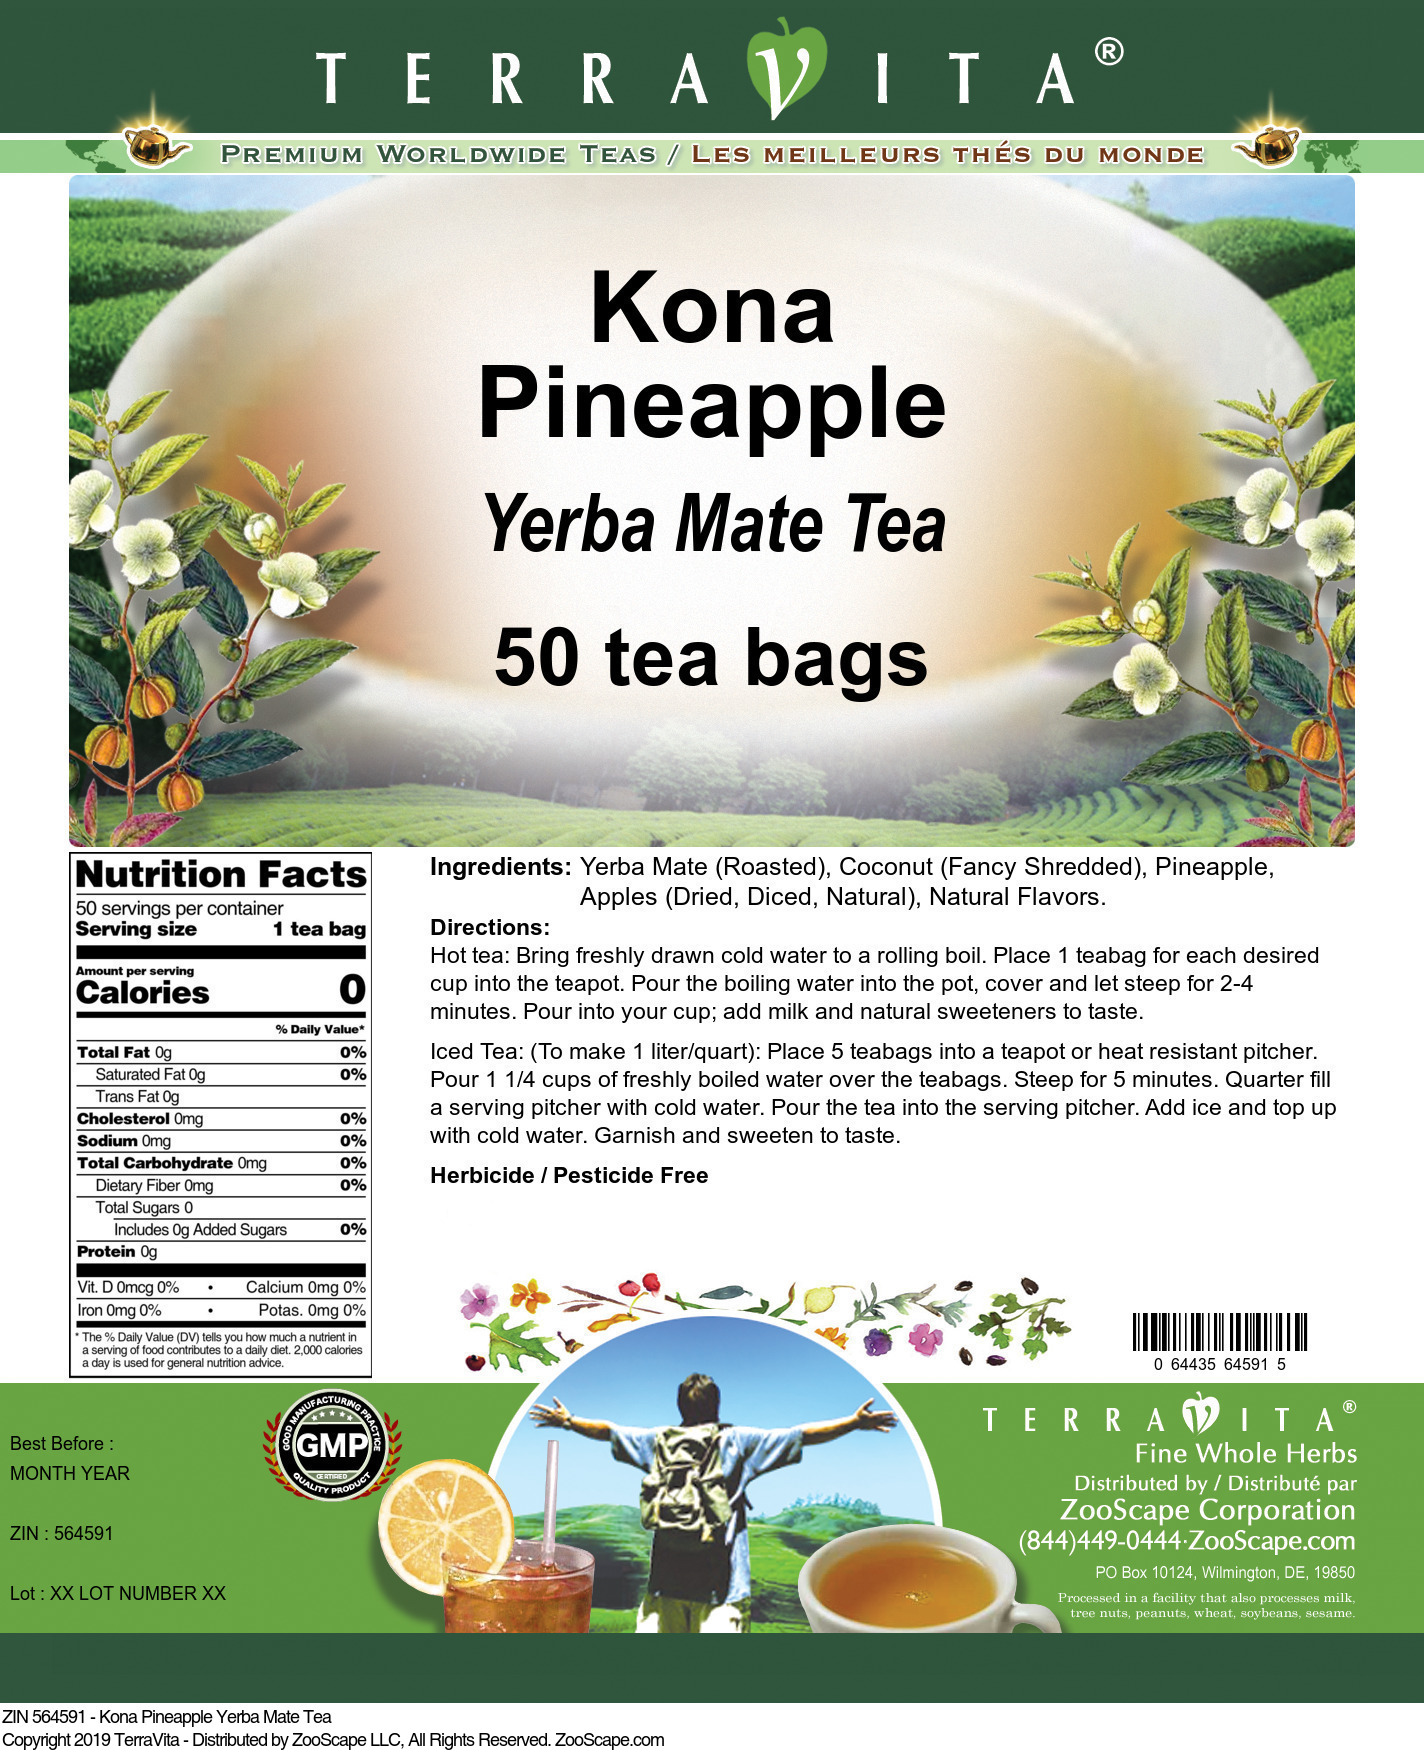 Kona Pineapple Yerba Mate Tea - Label